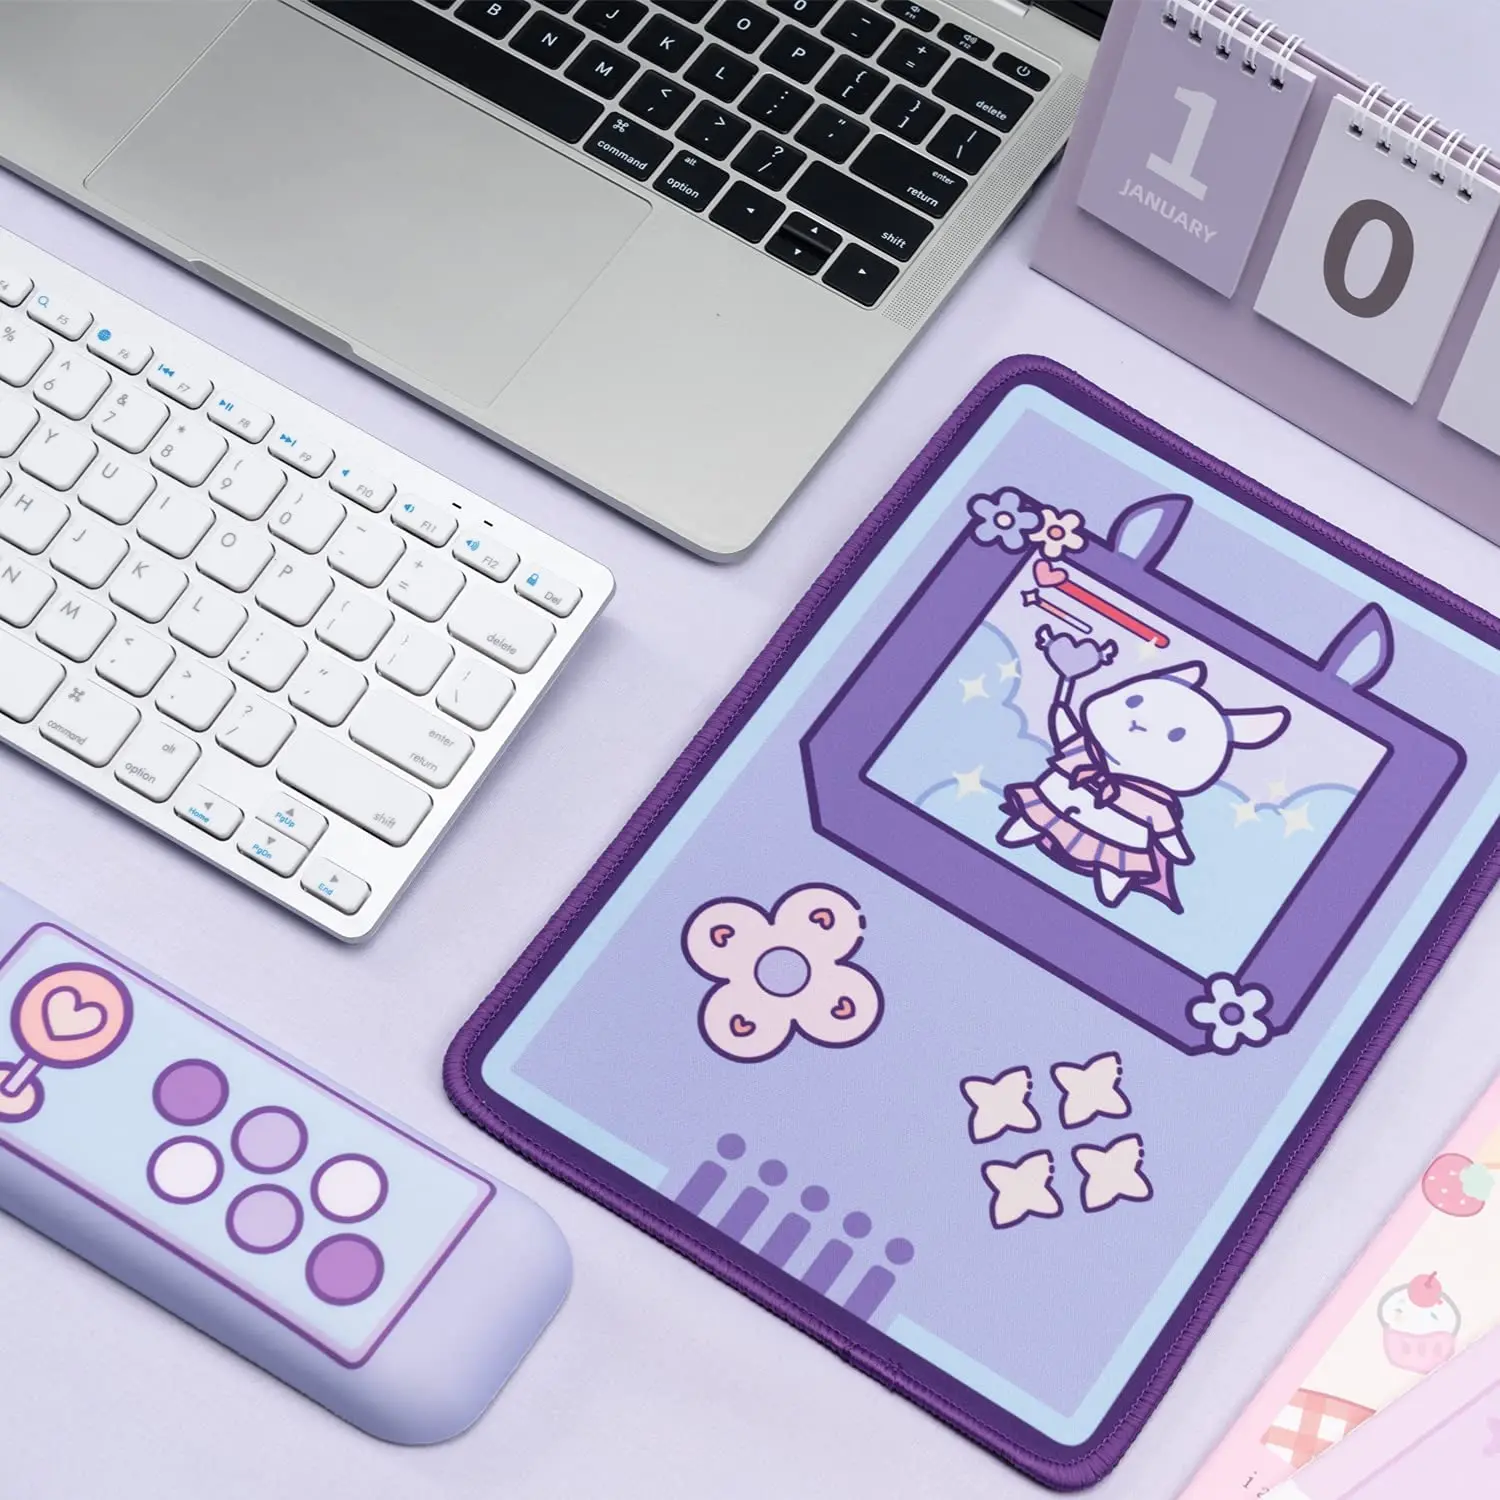 Grand tapis de souris de jeu Kawaii, antidérapant, rose, violet, motif  lapin Sakura, accessoires de bureau pour ordinateur portable - AliExpress